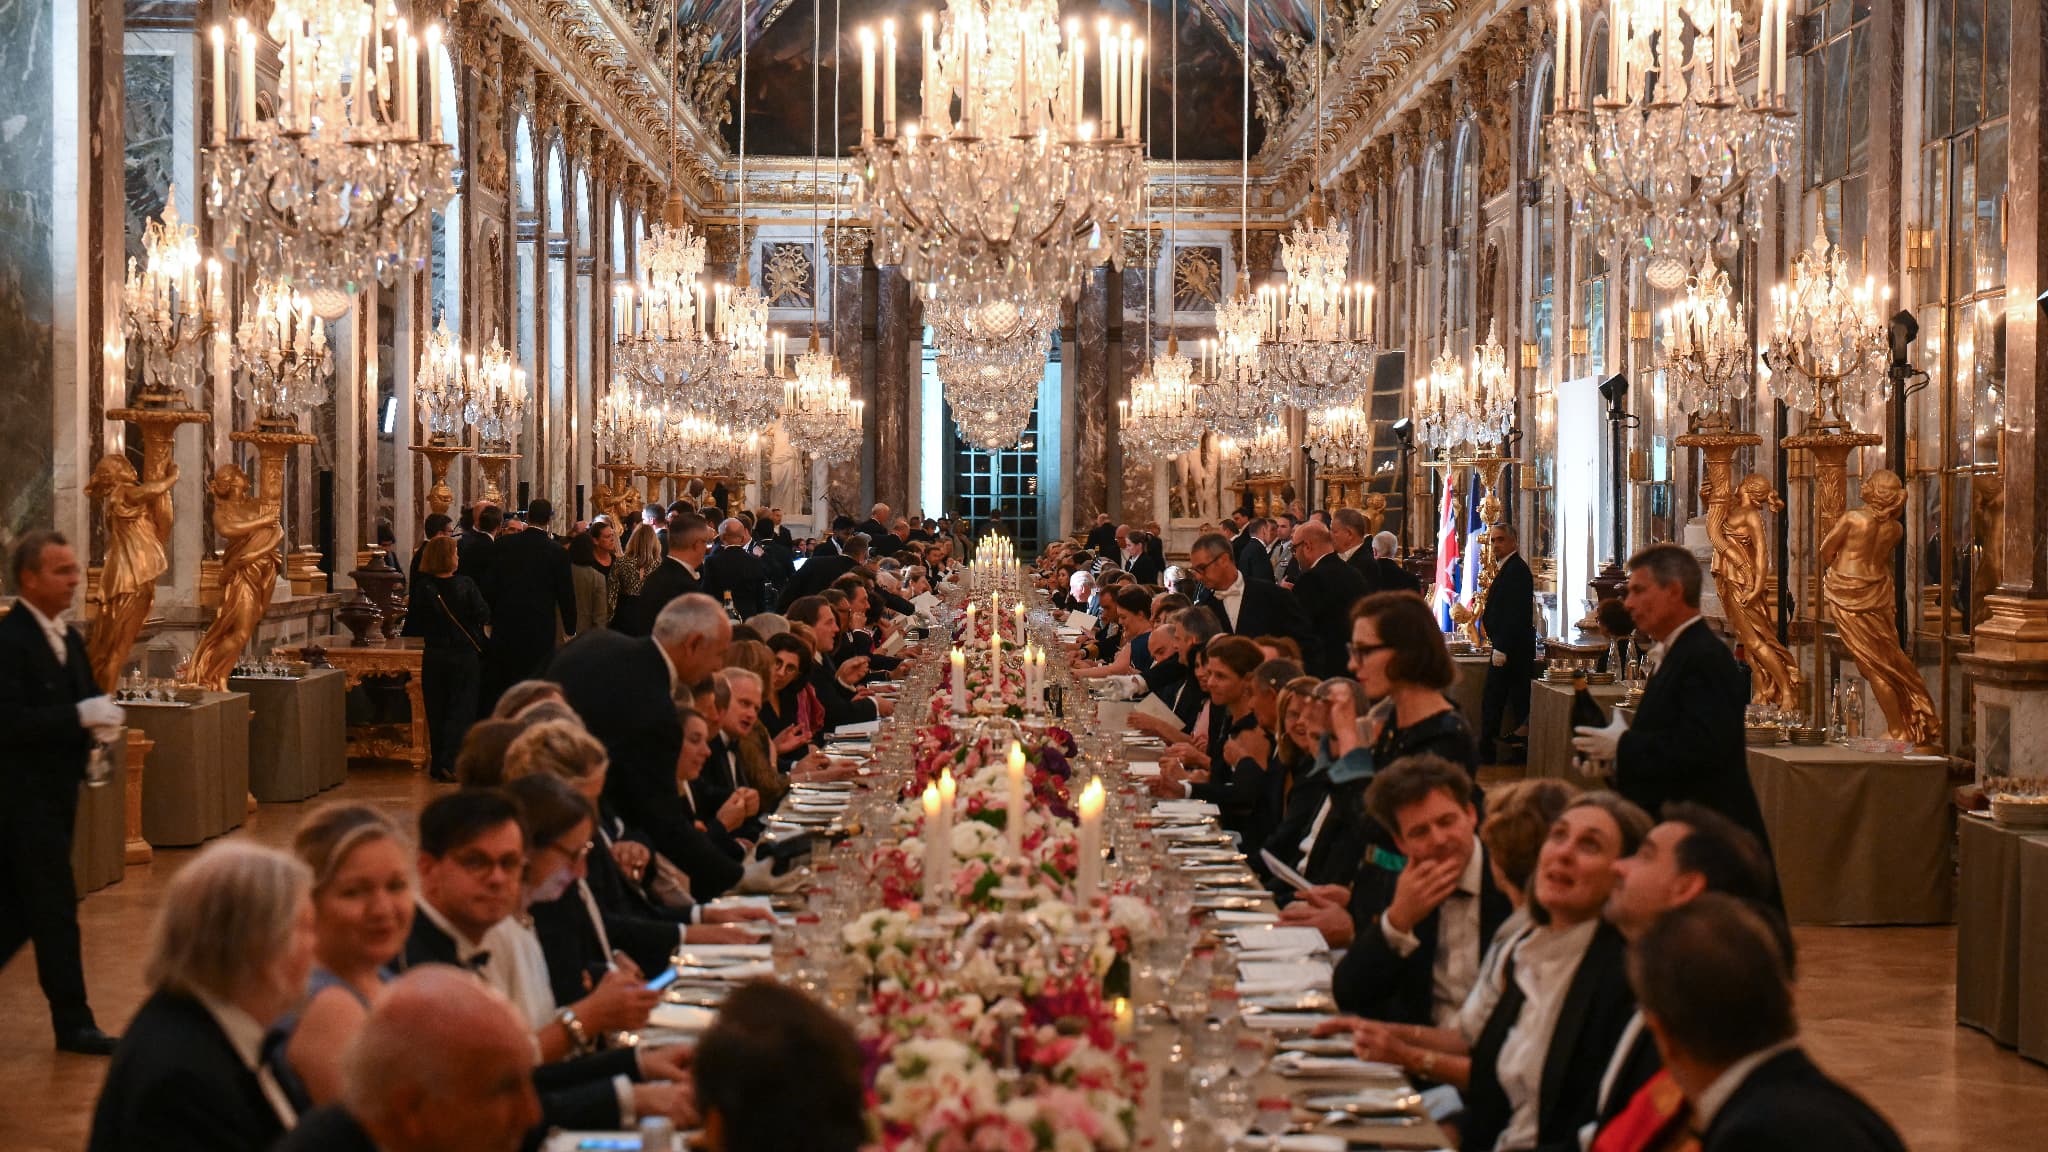 Charles III en France repas, discussions... Les coulisses du